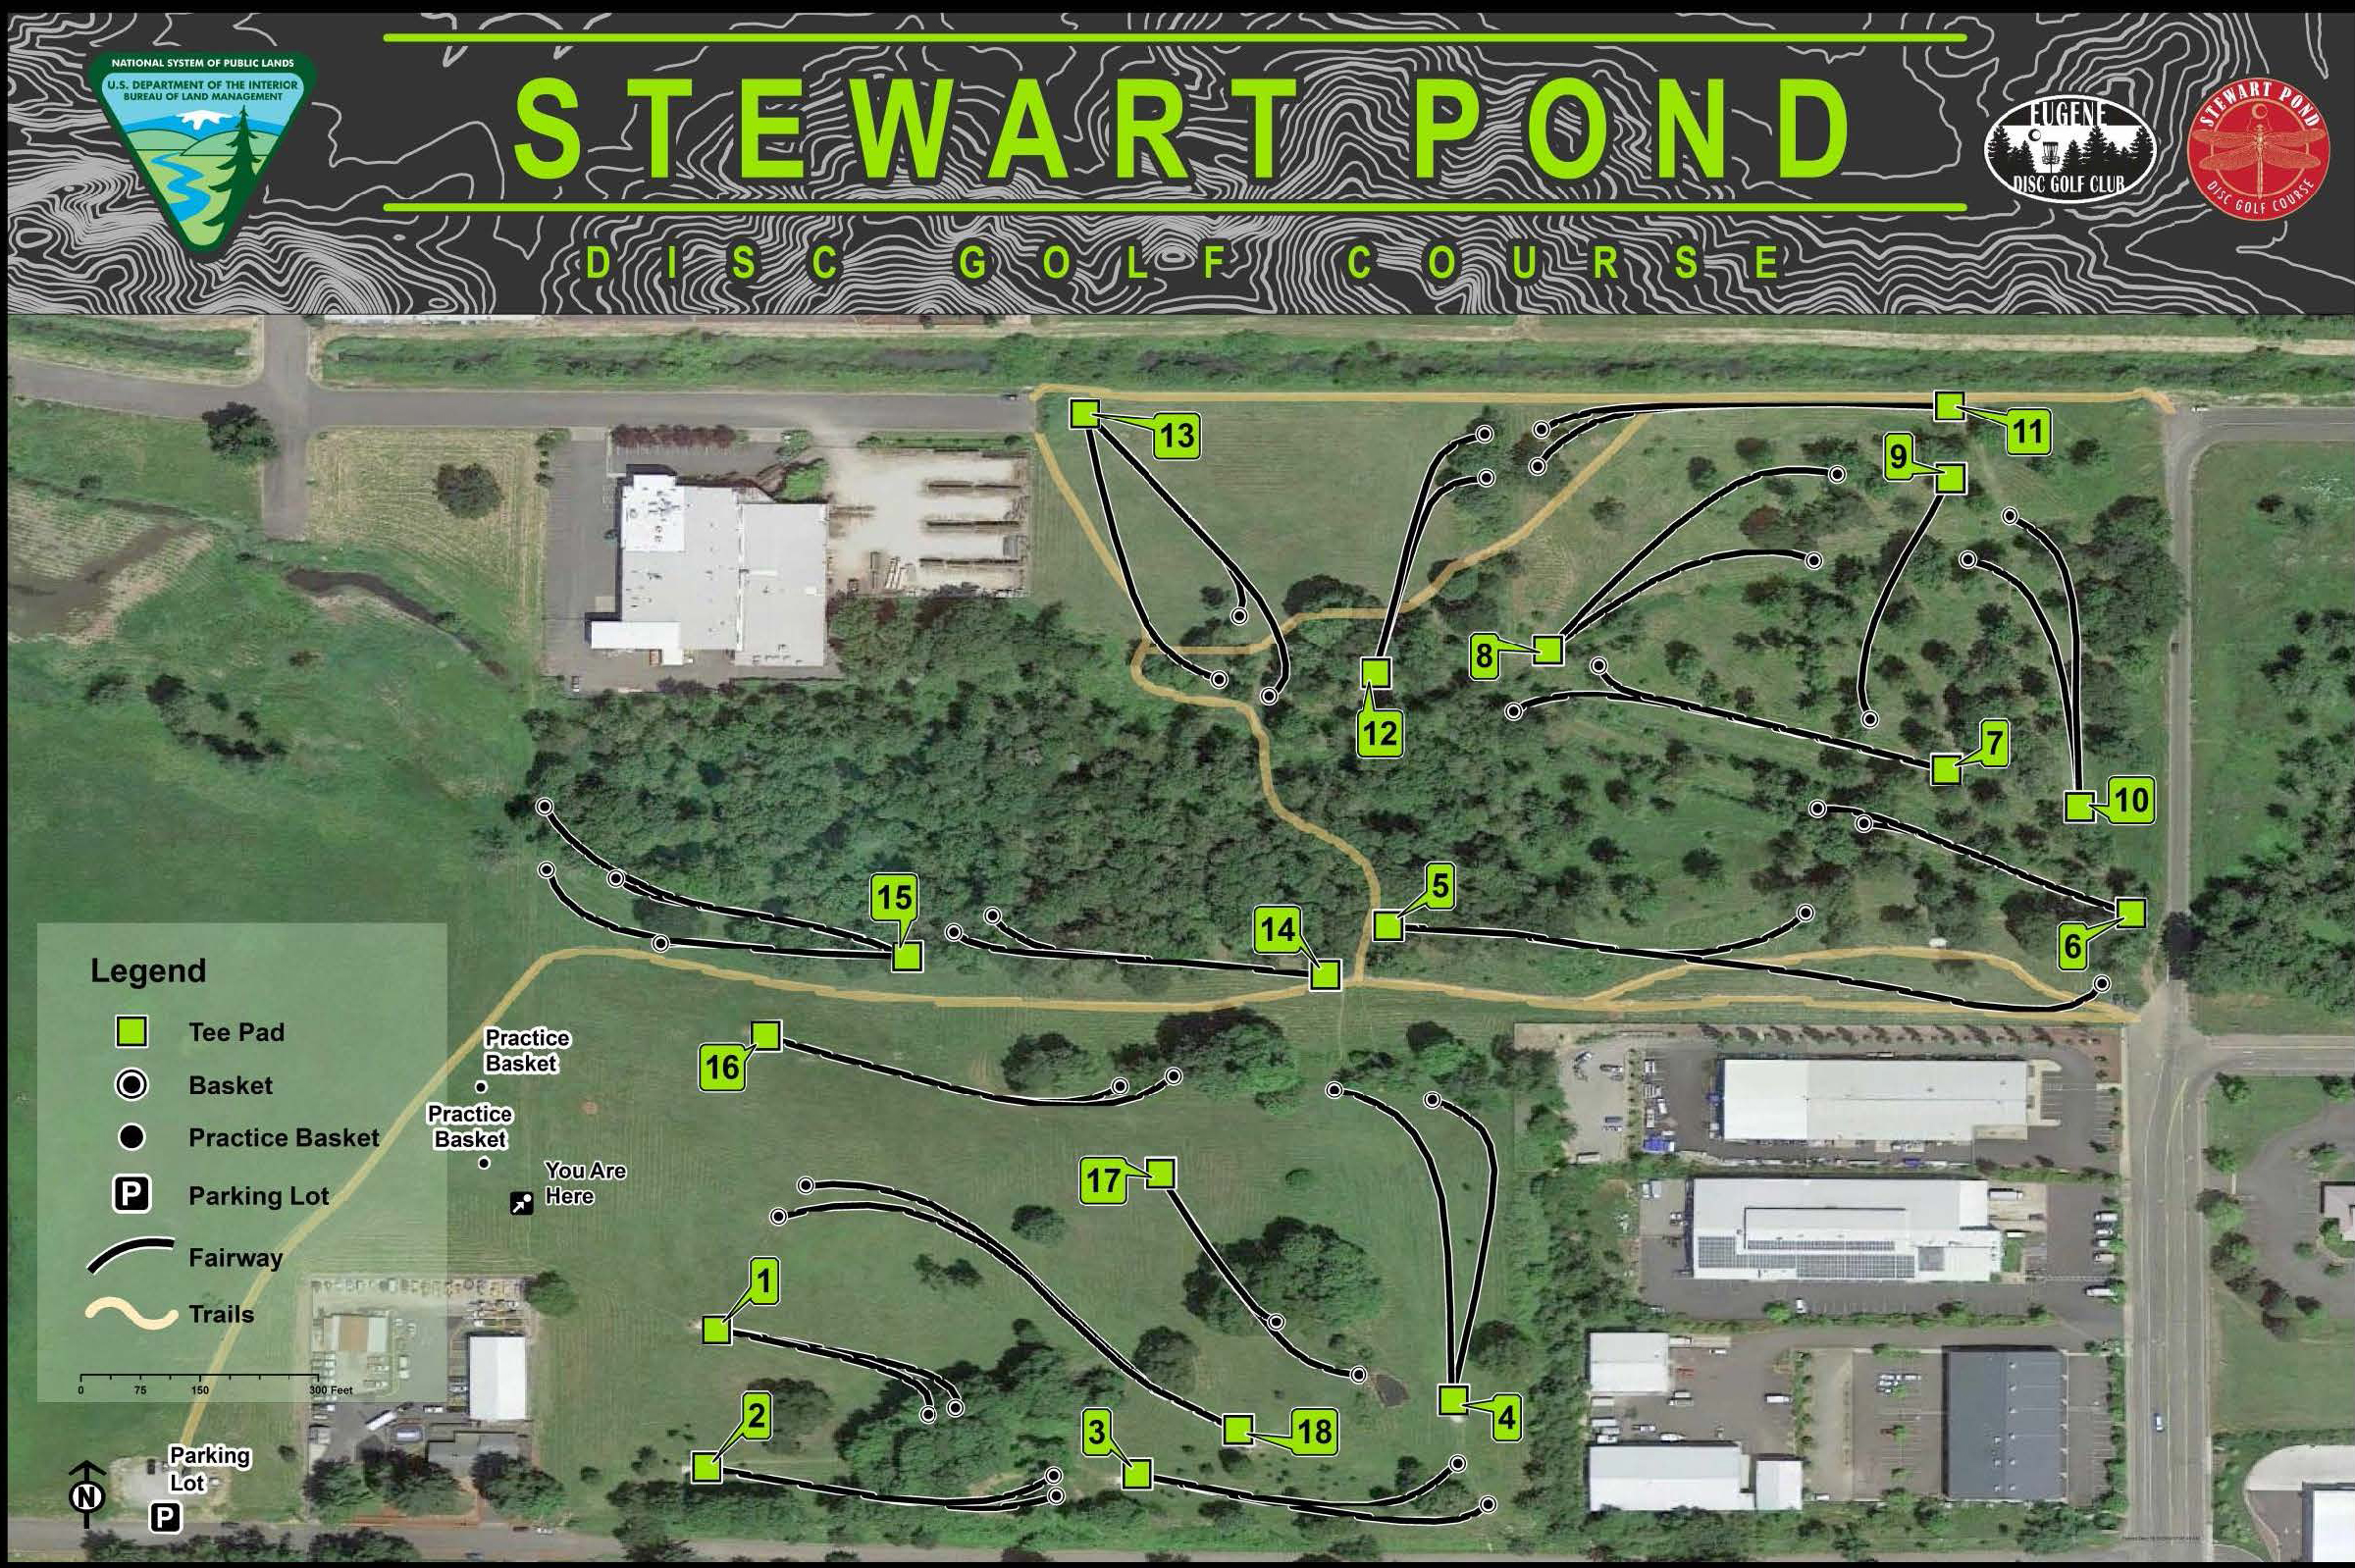 Stewart Pond Disc Golf Course Map